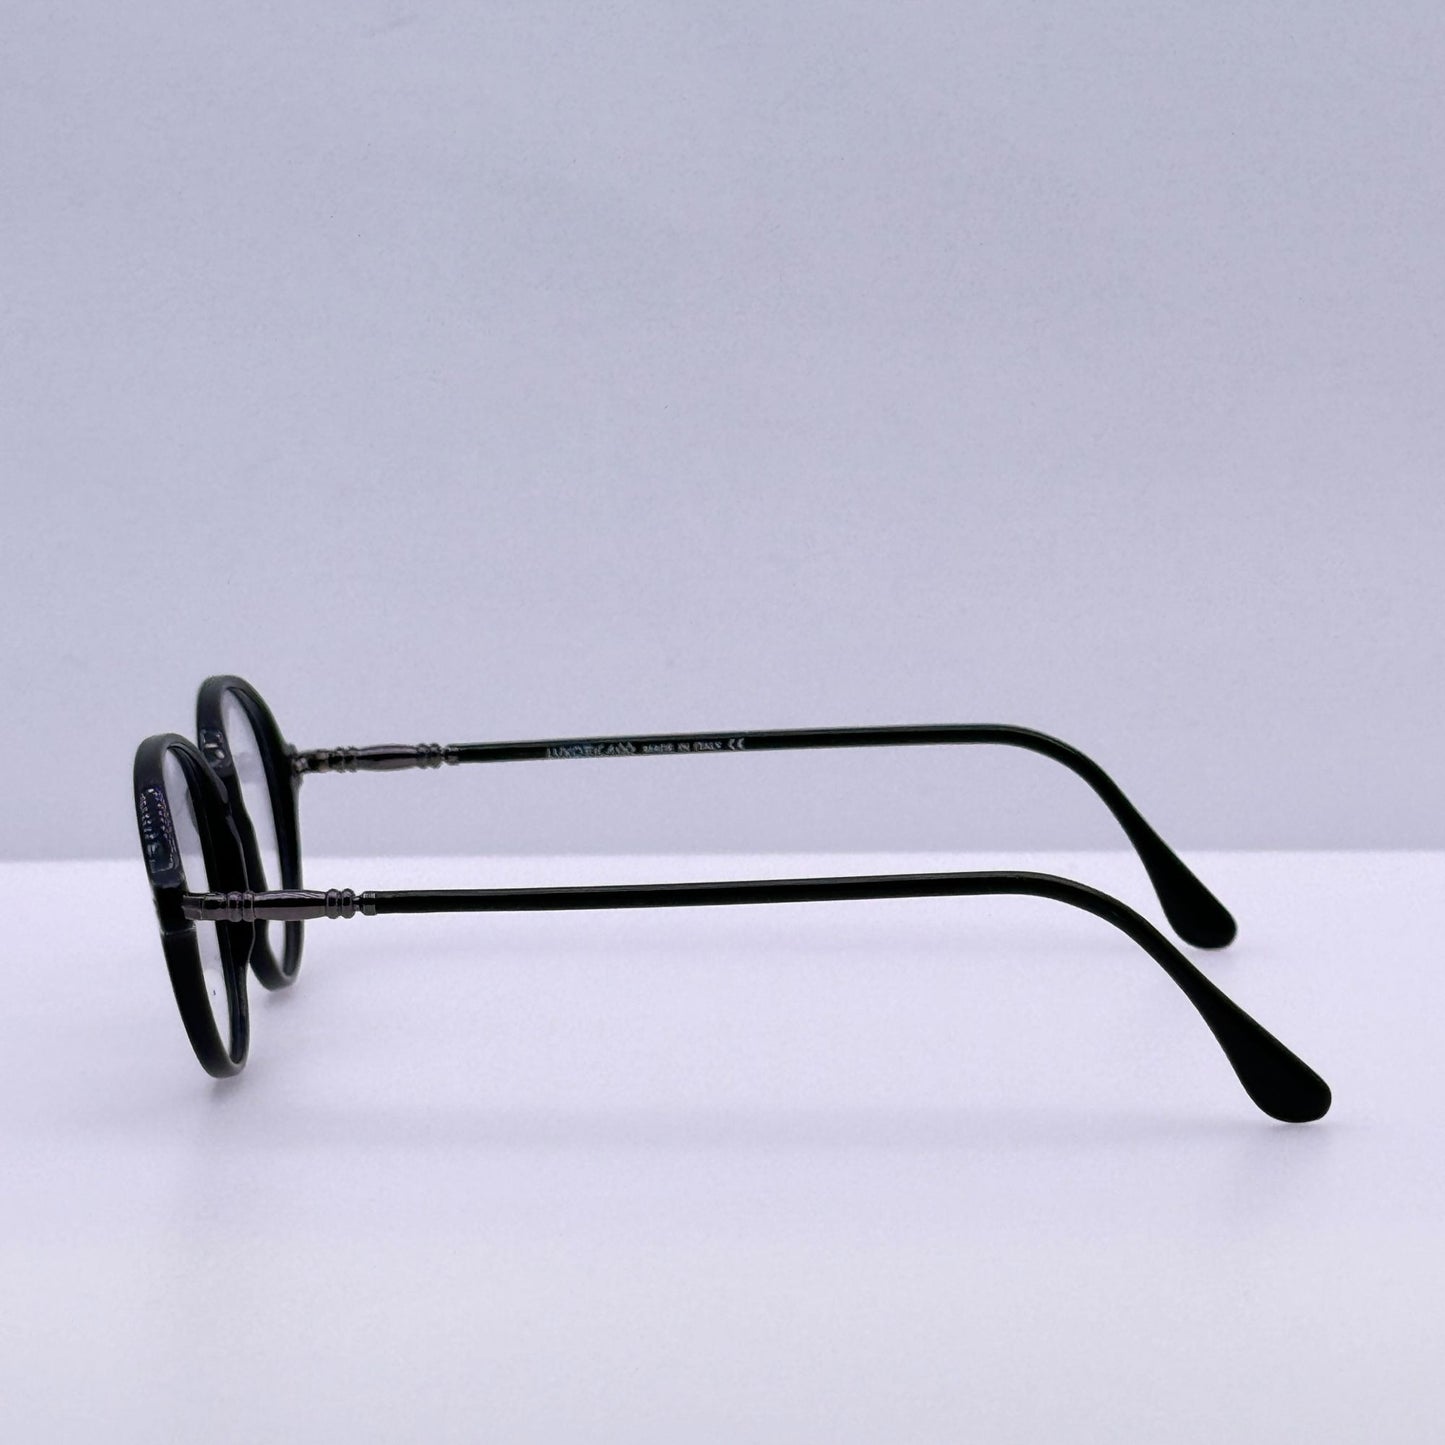 Luxottica Eyeglasses Eye Glasses Frames LU3145 O20 48-18-135 Black Italy